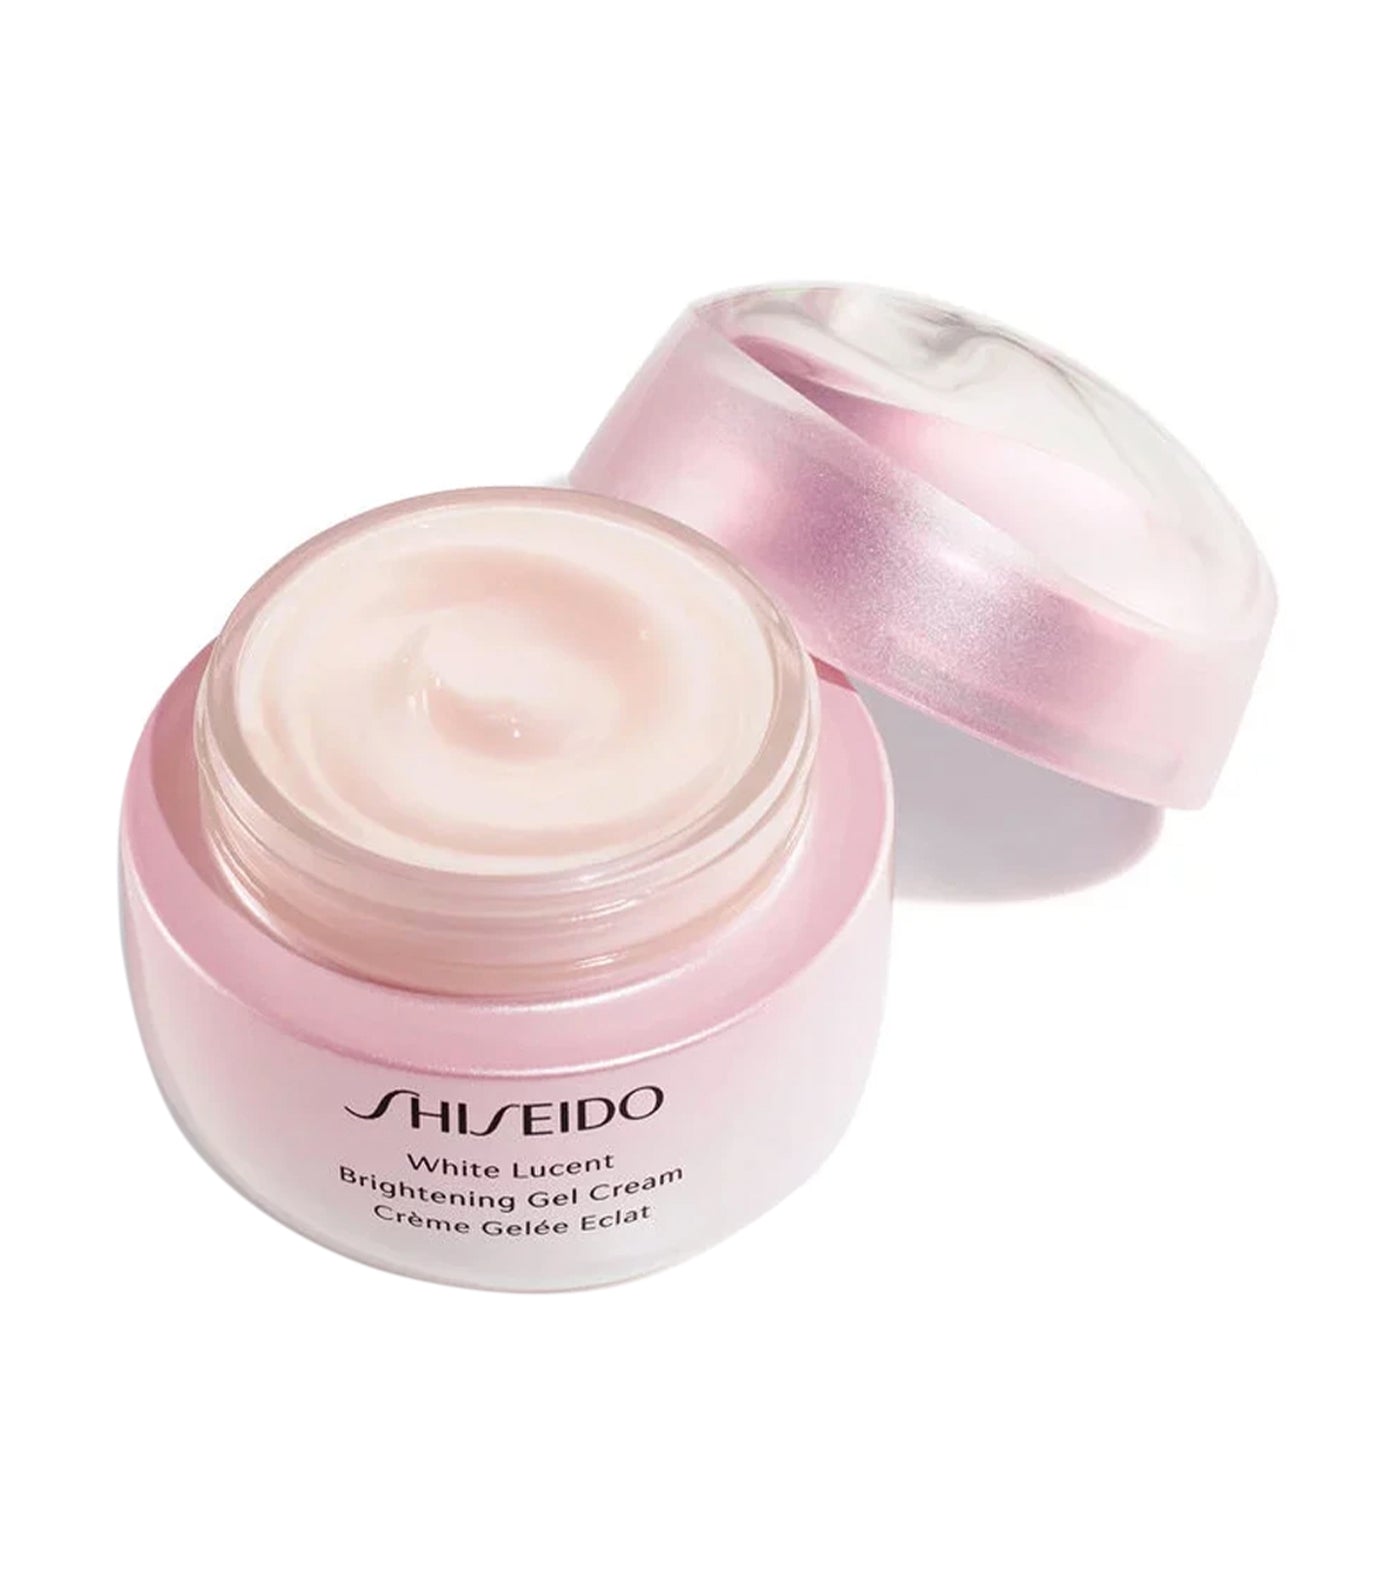 shiseido white lucent brightening gel cream